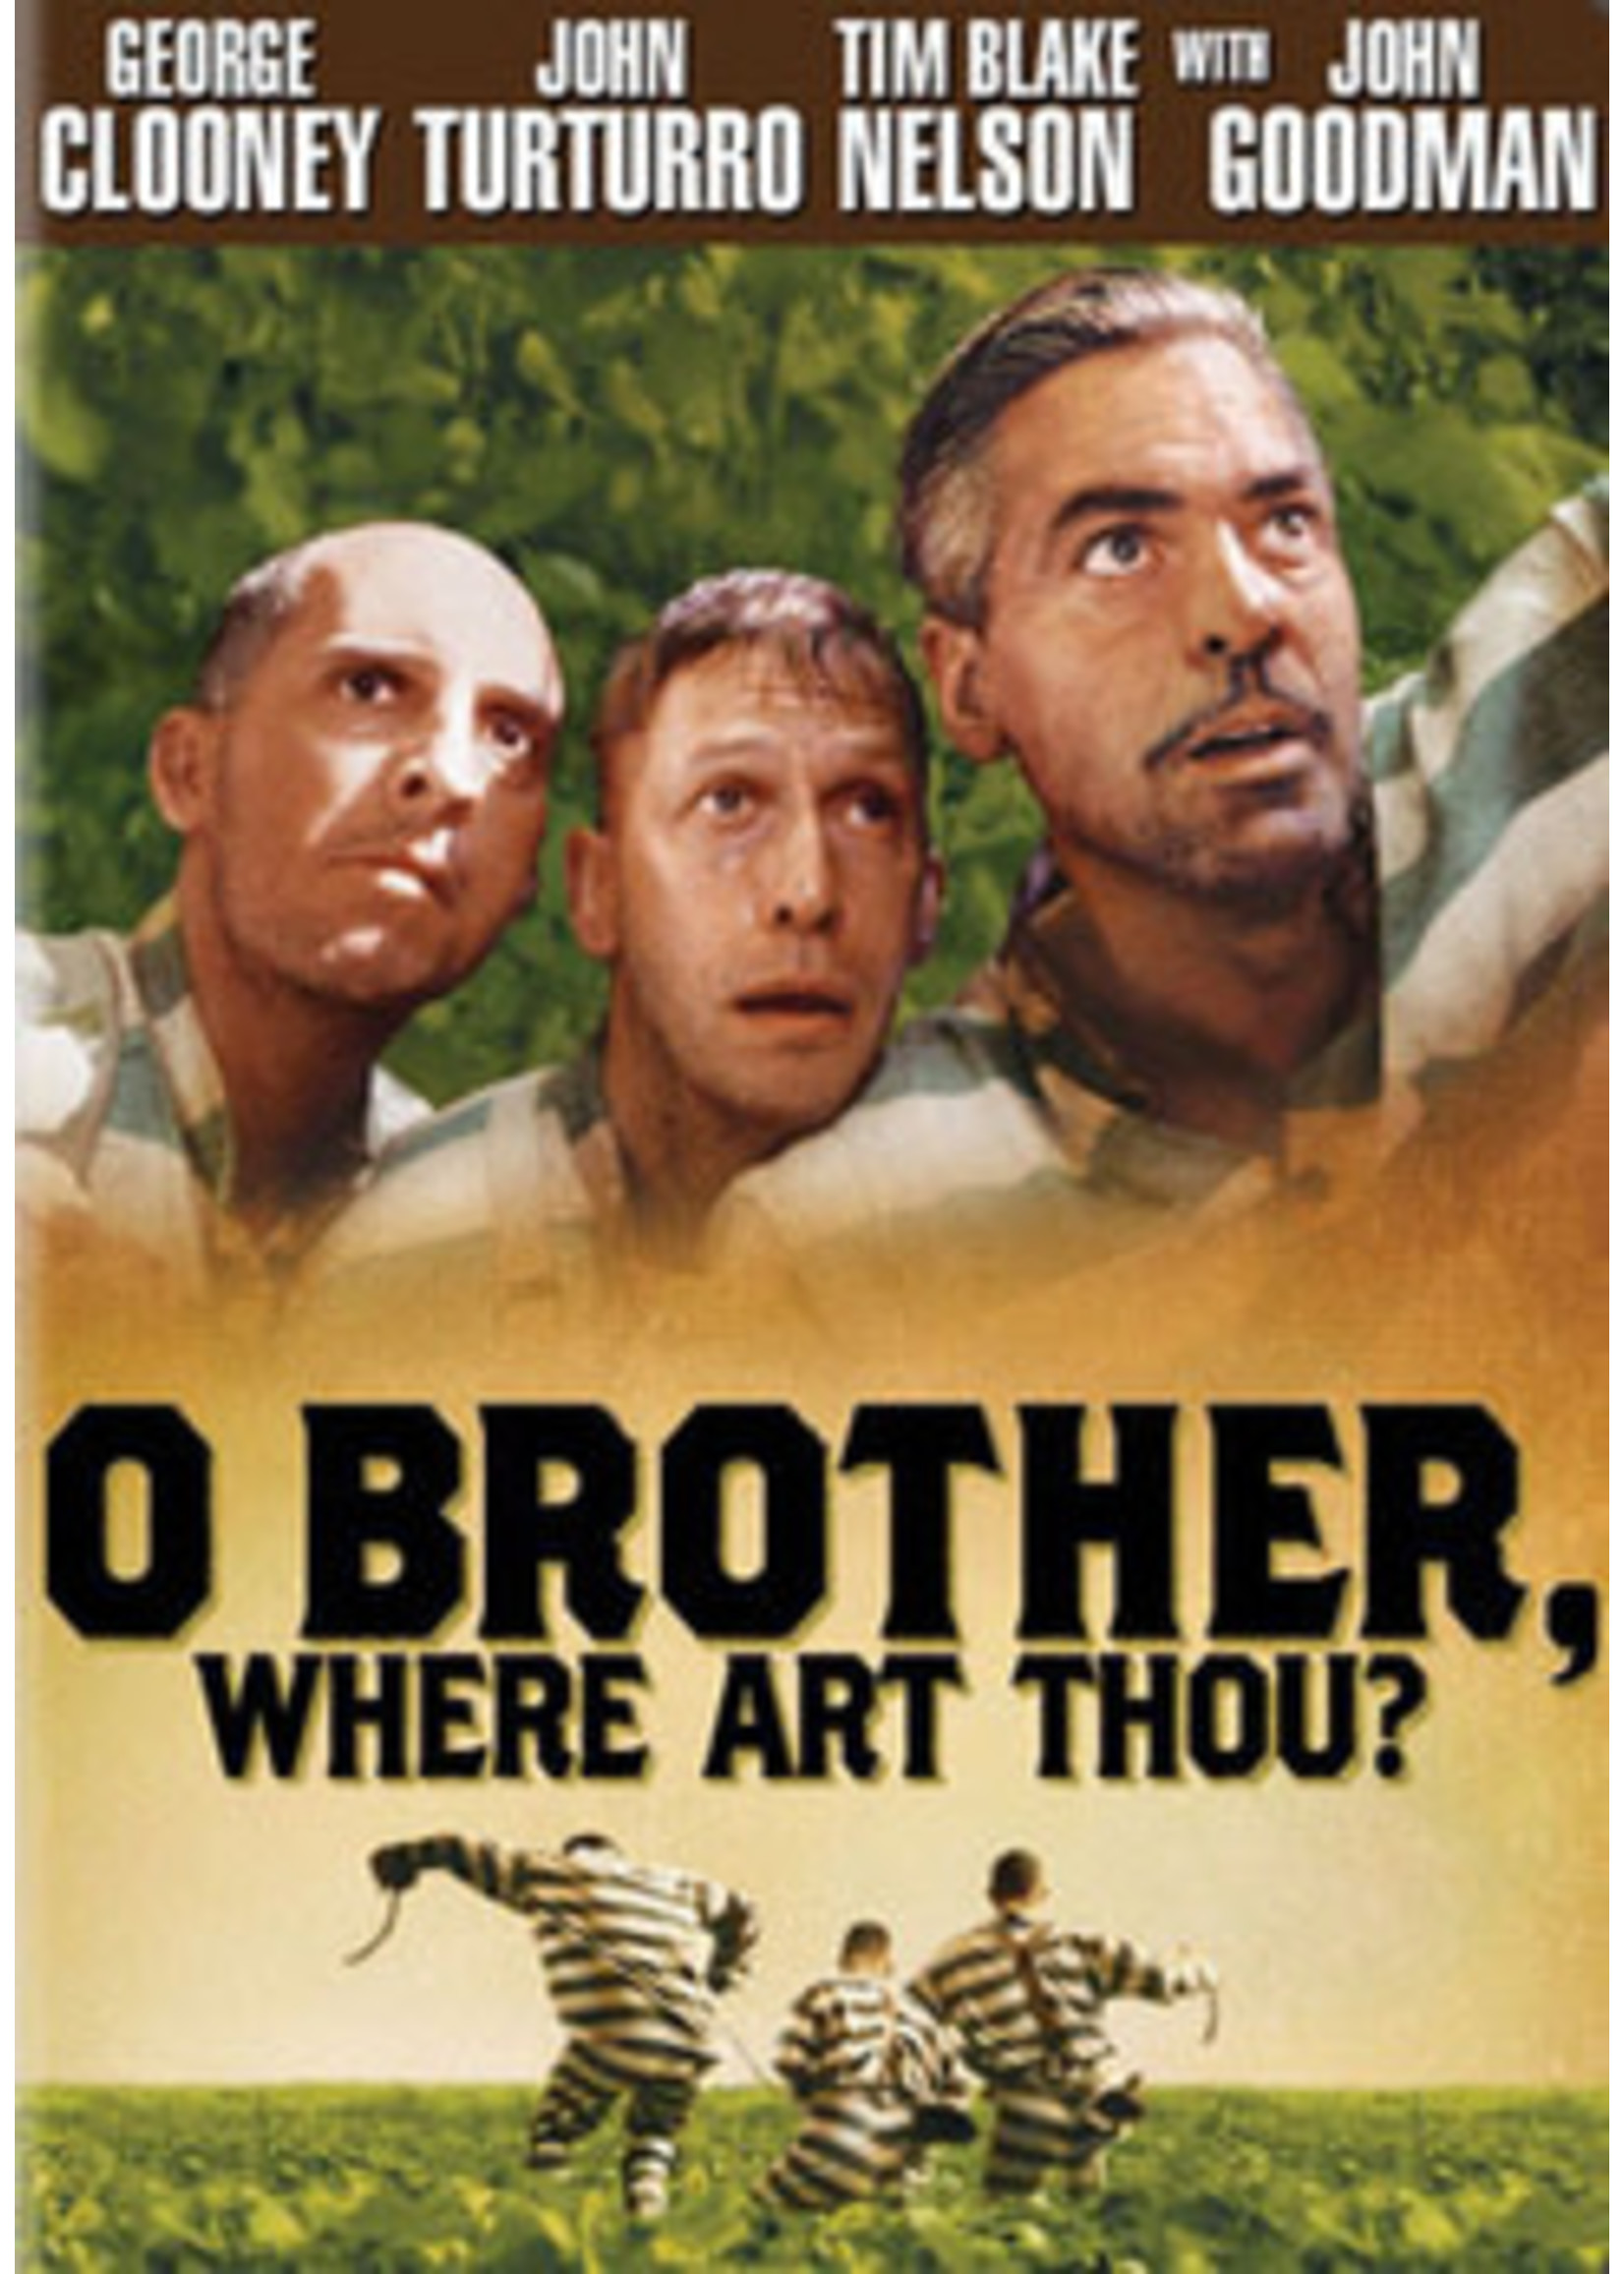 O Brother Where Art Thou DVD